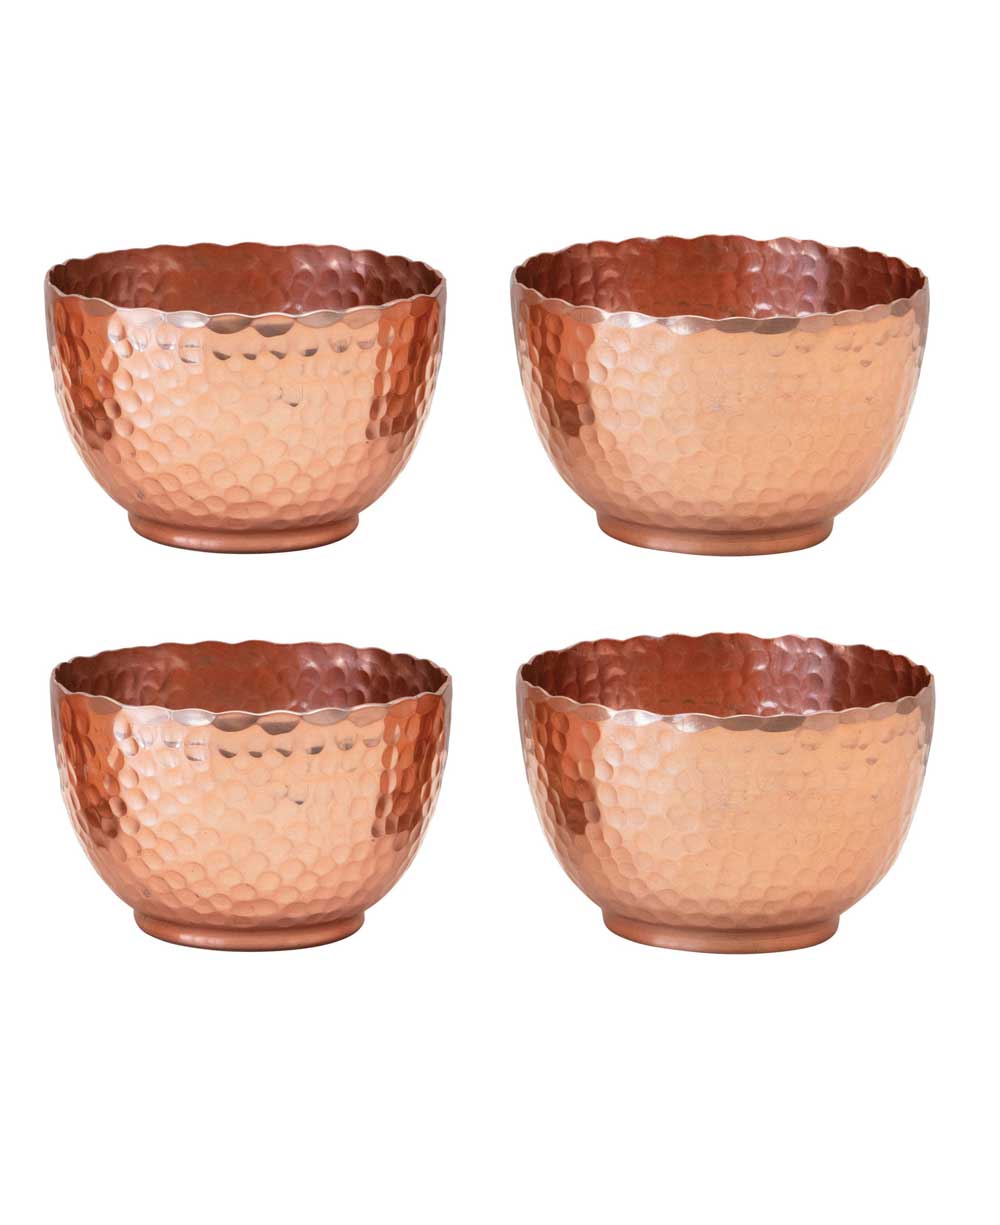 Copper Finish Set of 4 Offering Bowls - Bowls